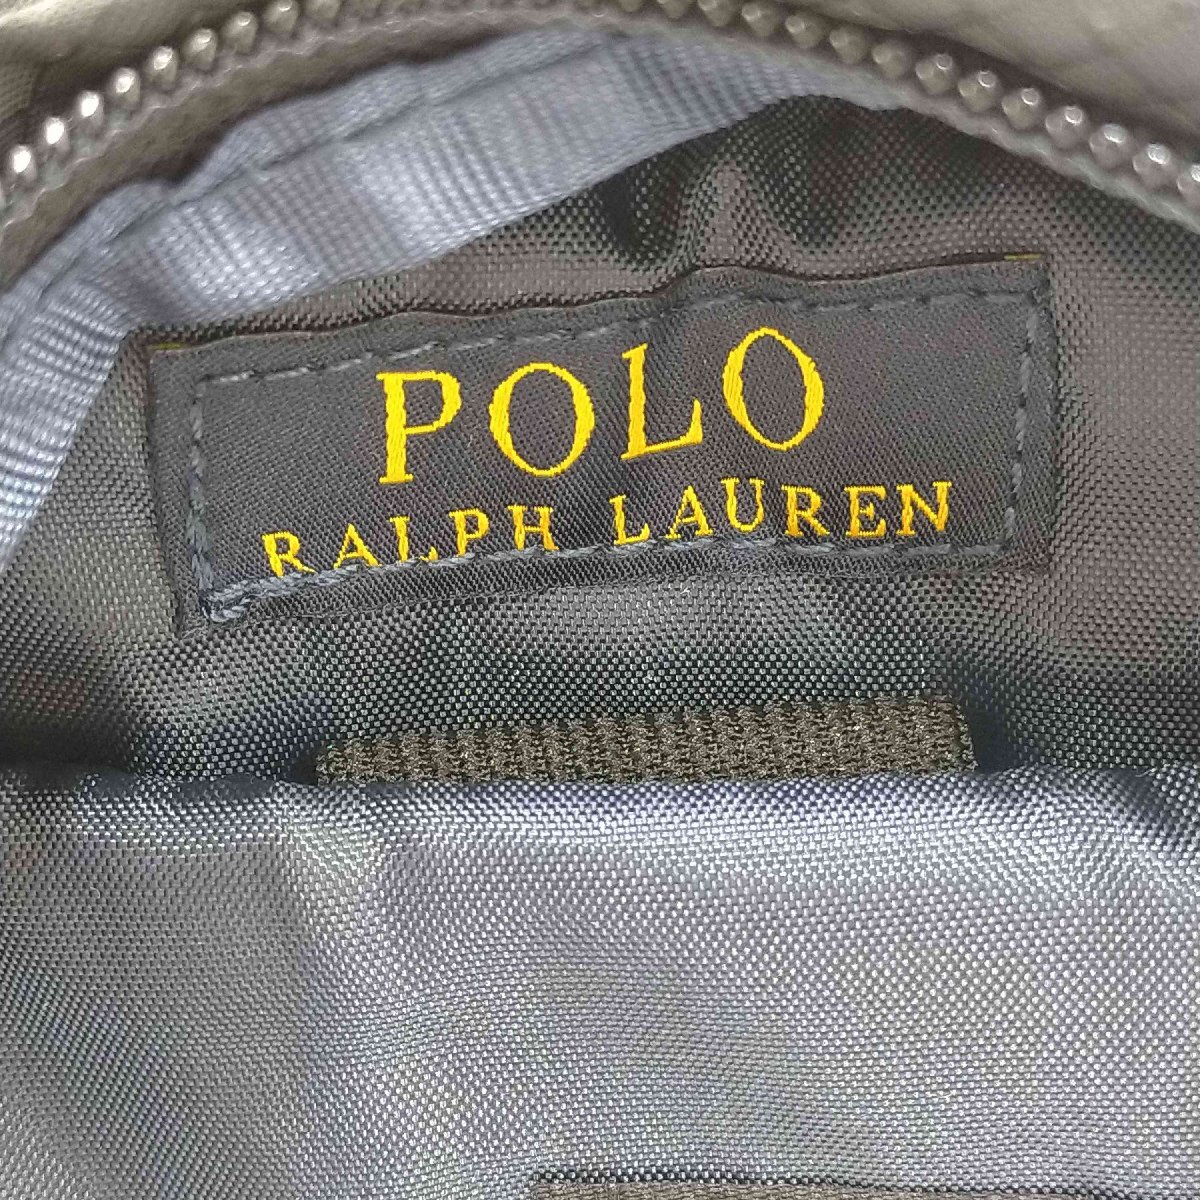 Polo by RALPH LAUREN(ポロバイラルフローレン) ビッグポニー刺繍 バックパック メンズ 中古 古着 1022_画像6